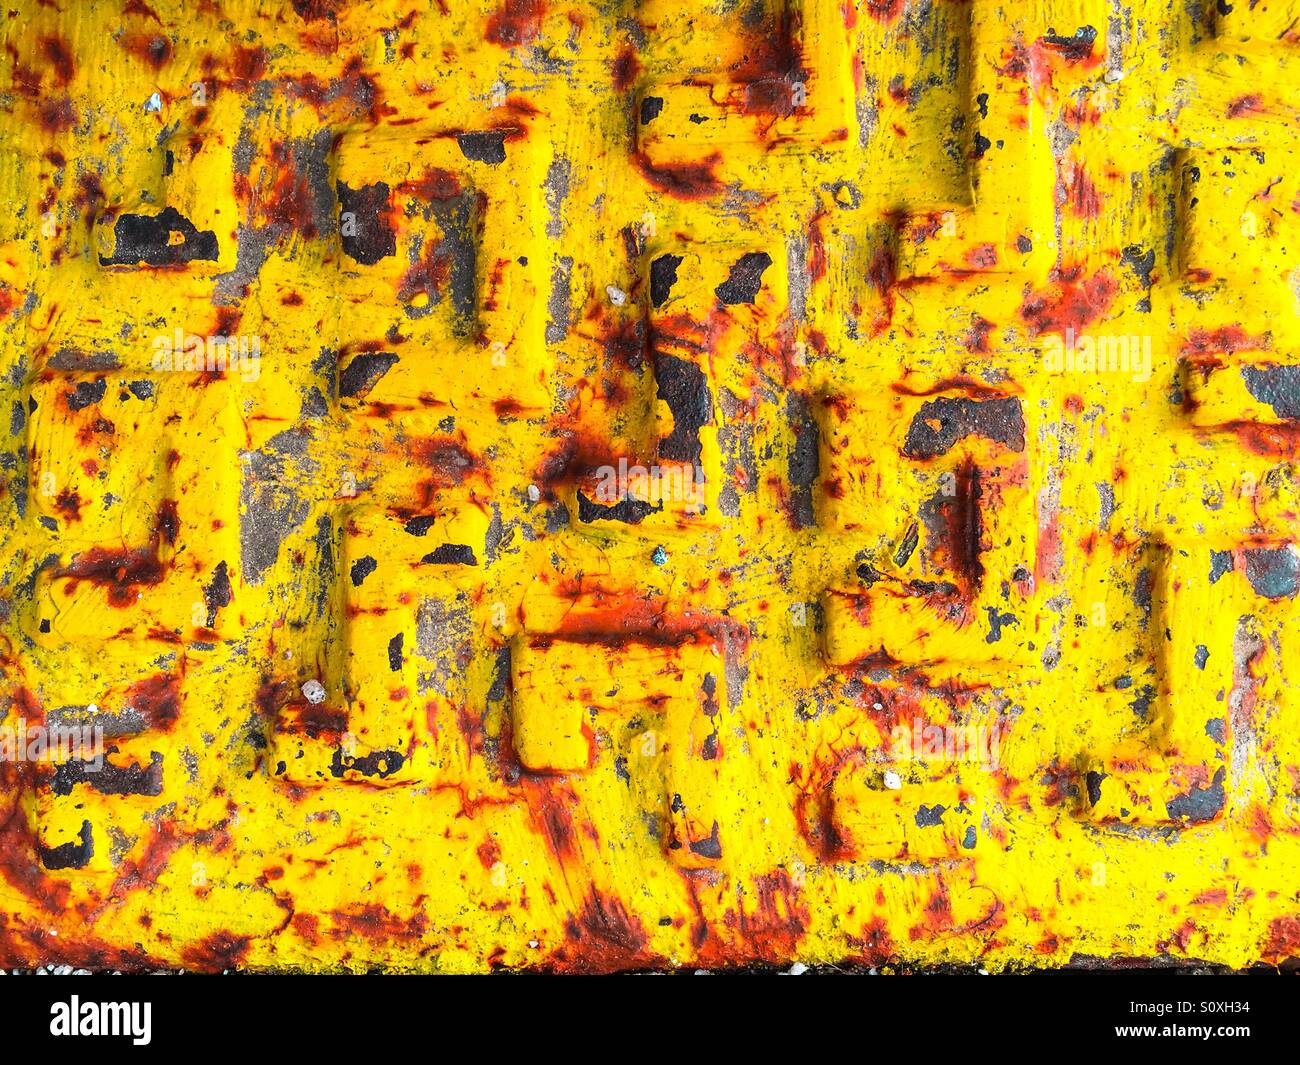 Rusty metal texture with peeling yellow paint Stock Photo